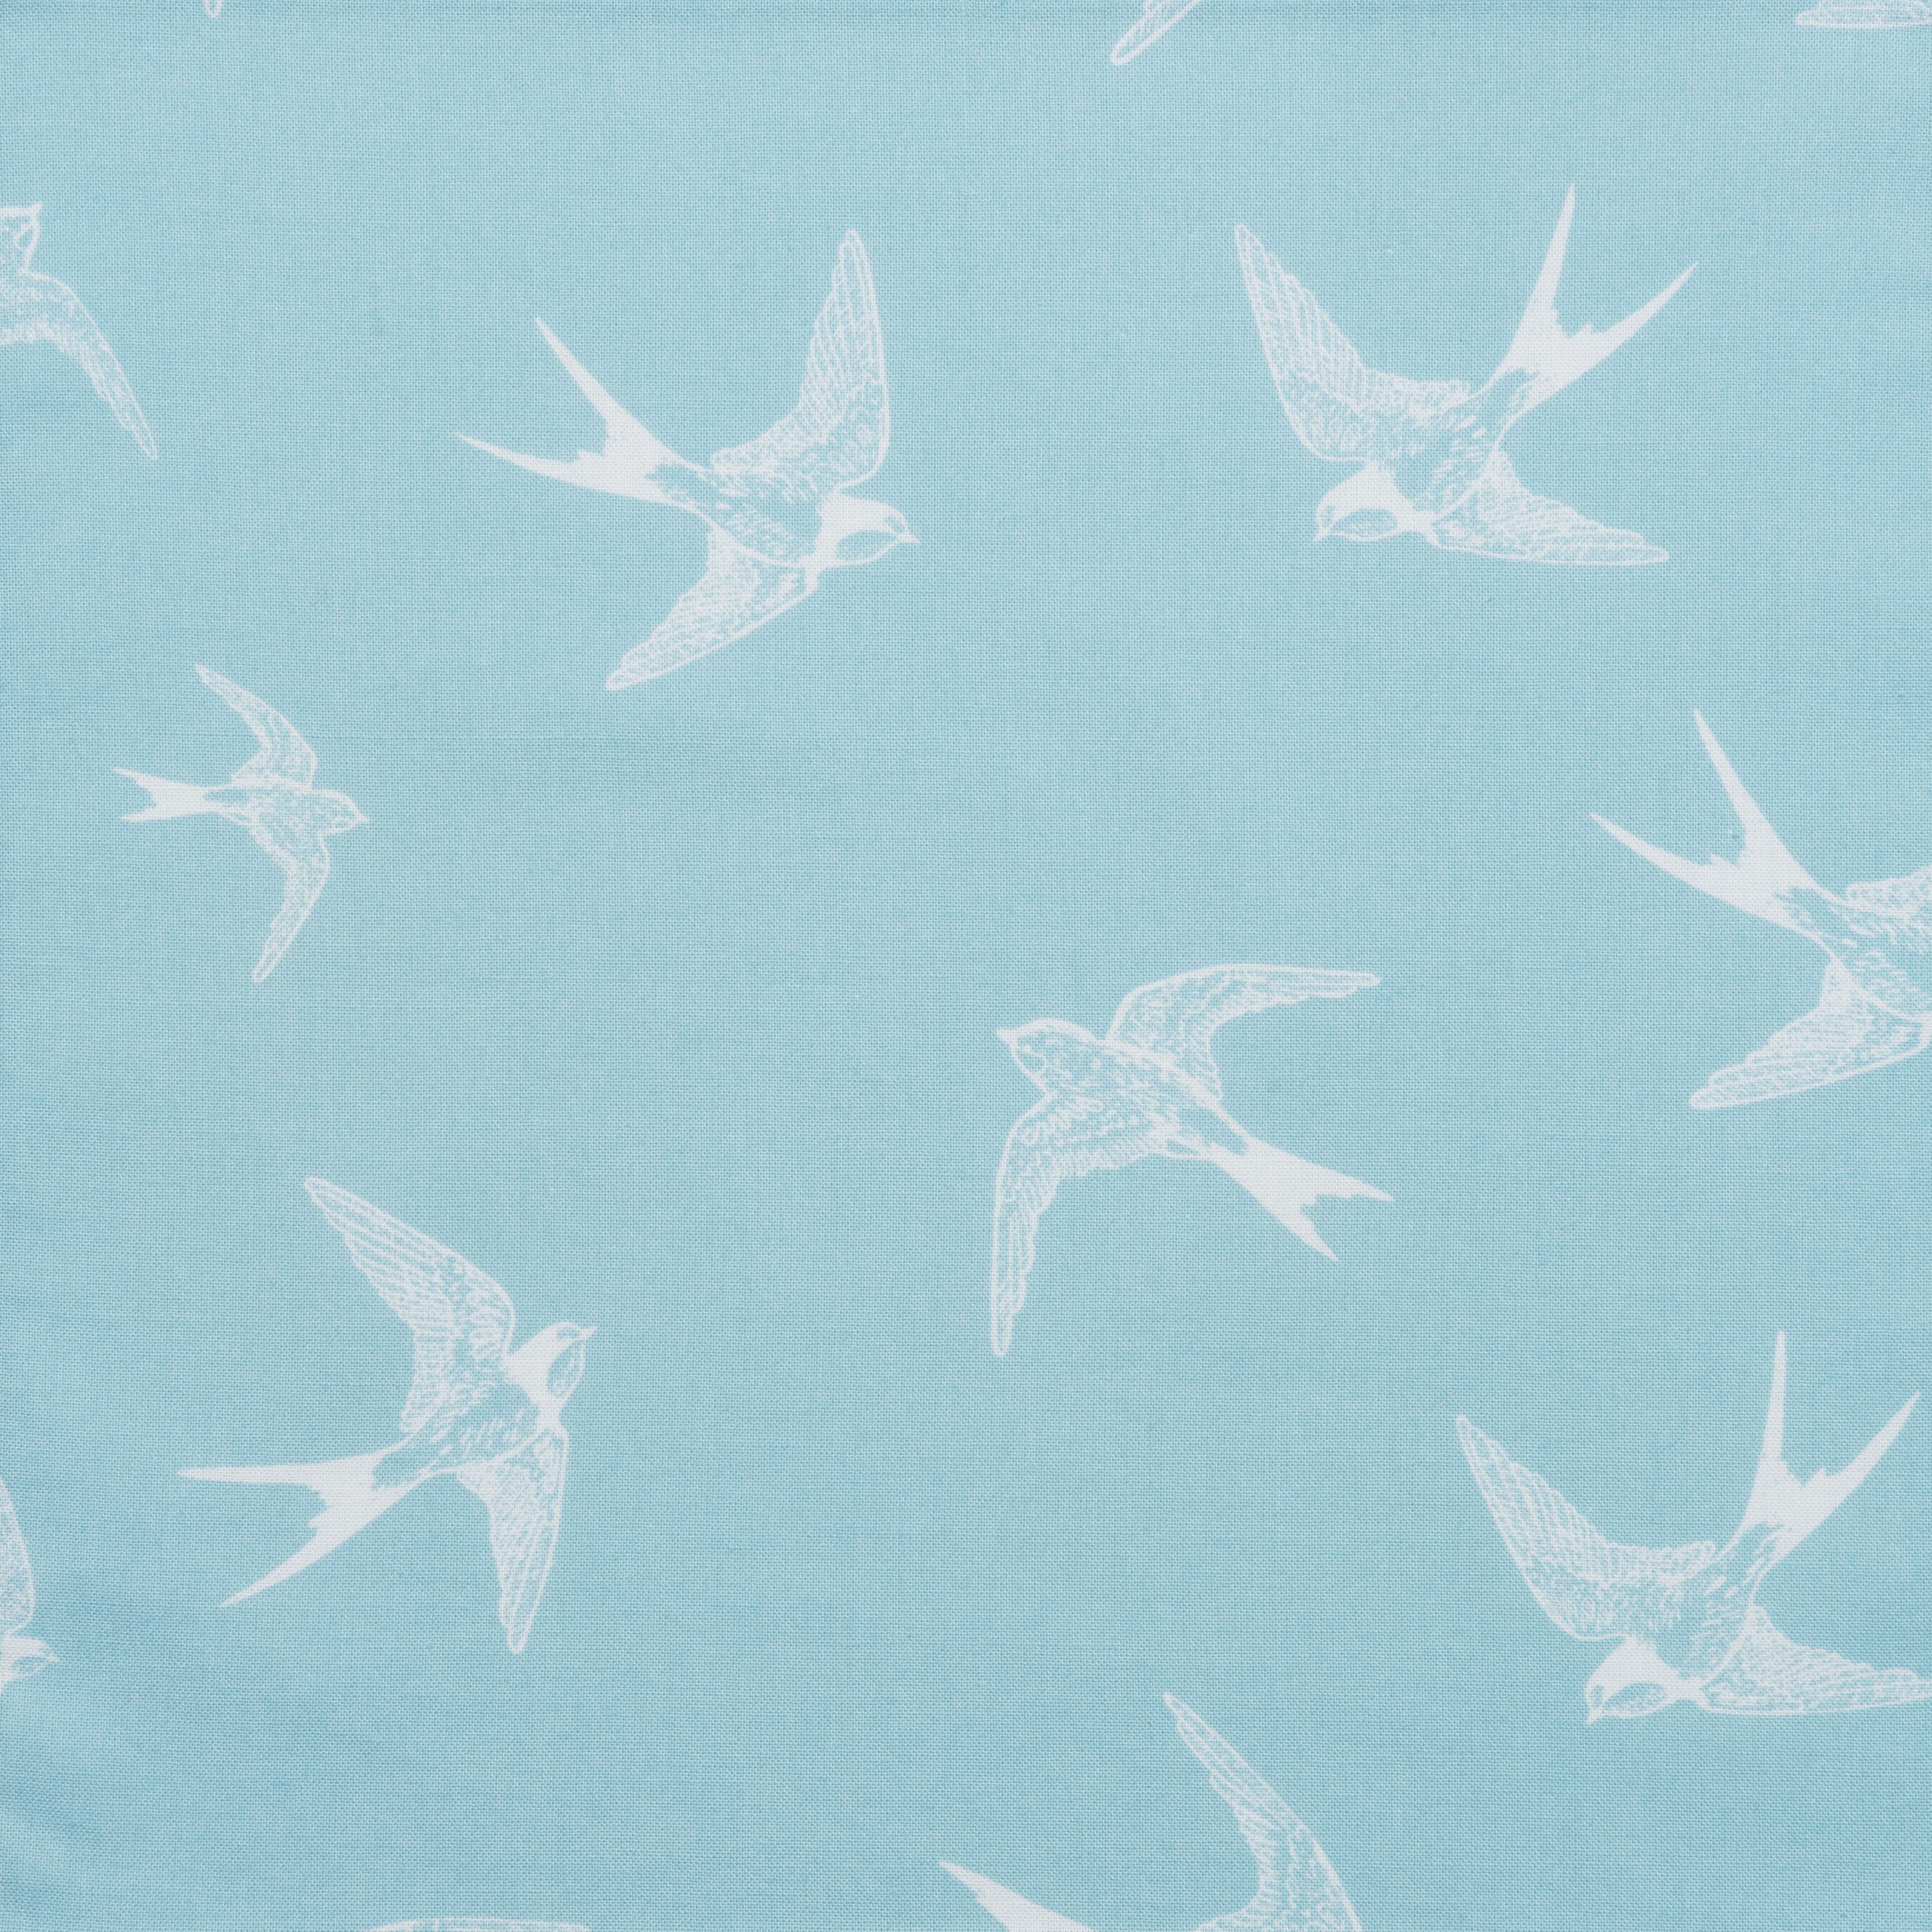 Handkerchiefs "Swallows" in a set (5 pieces, organic cotton)